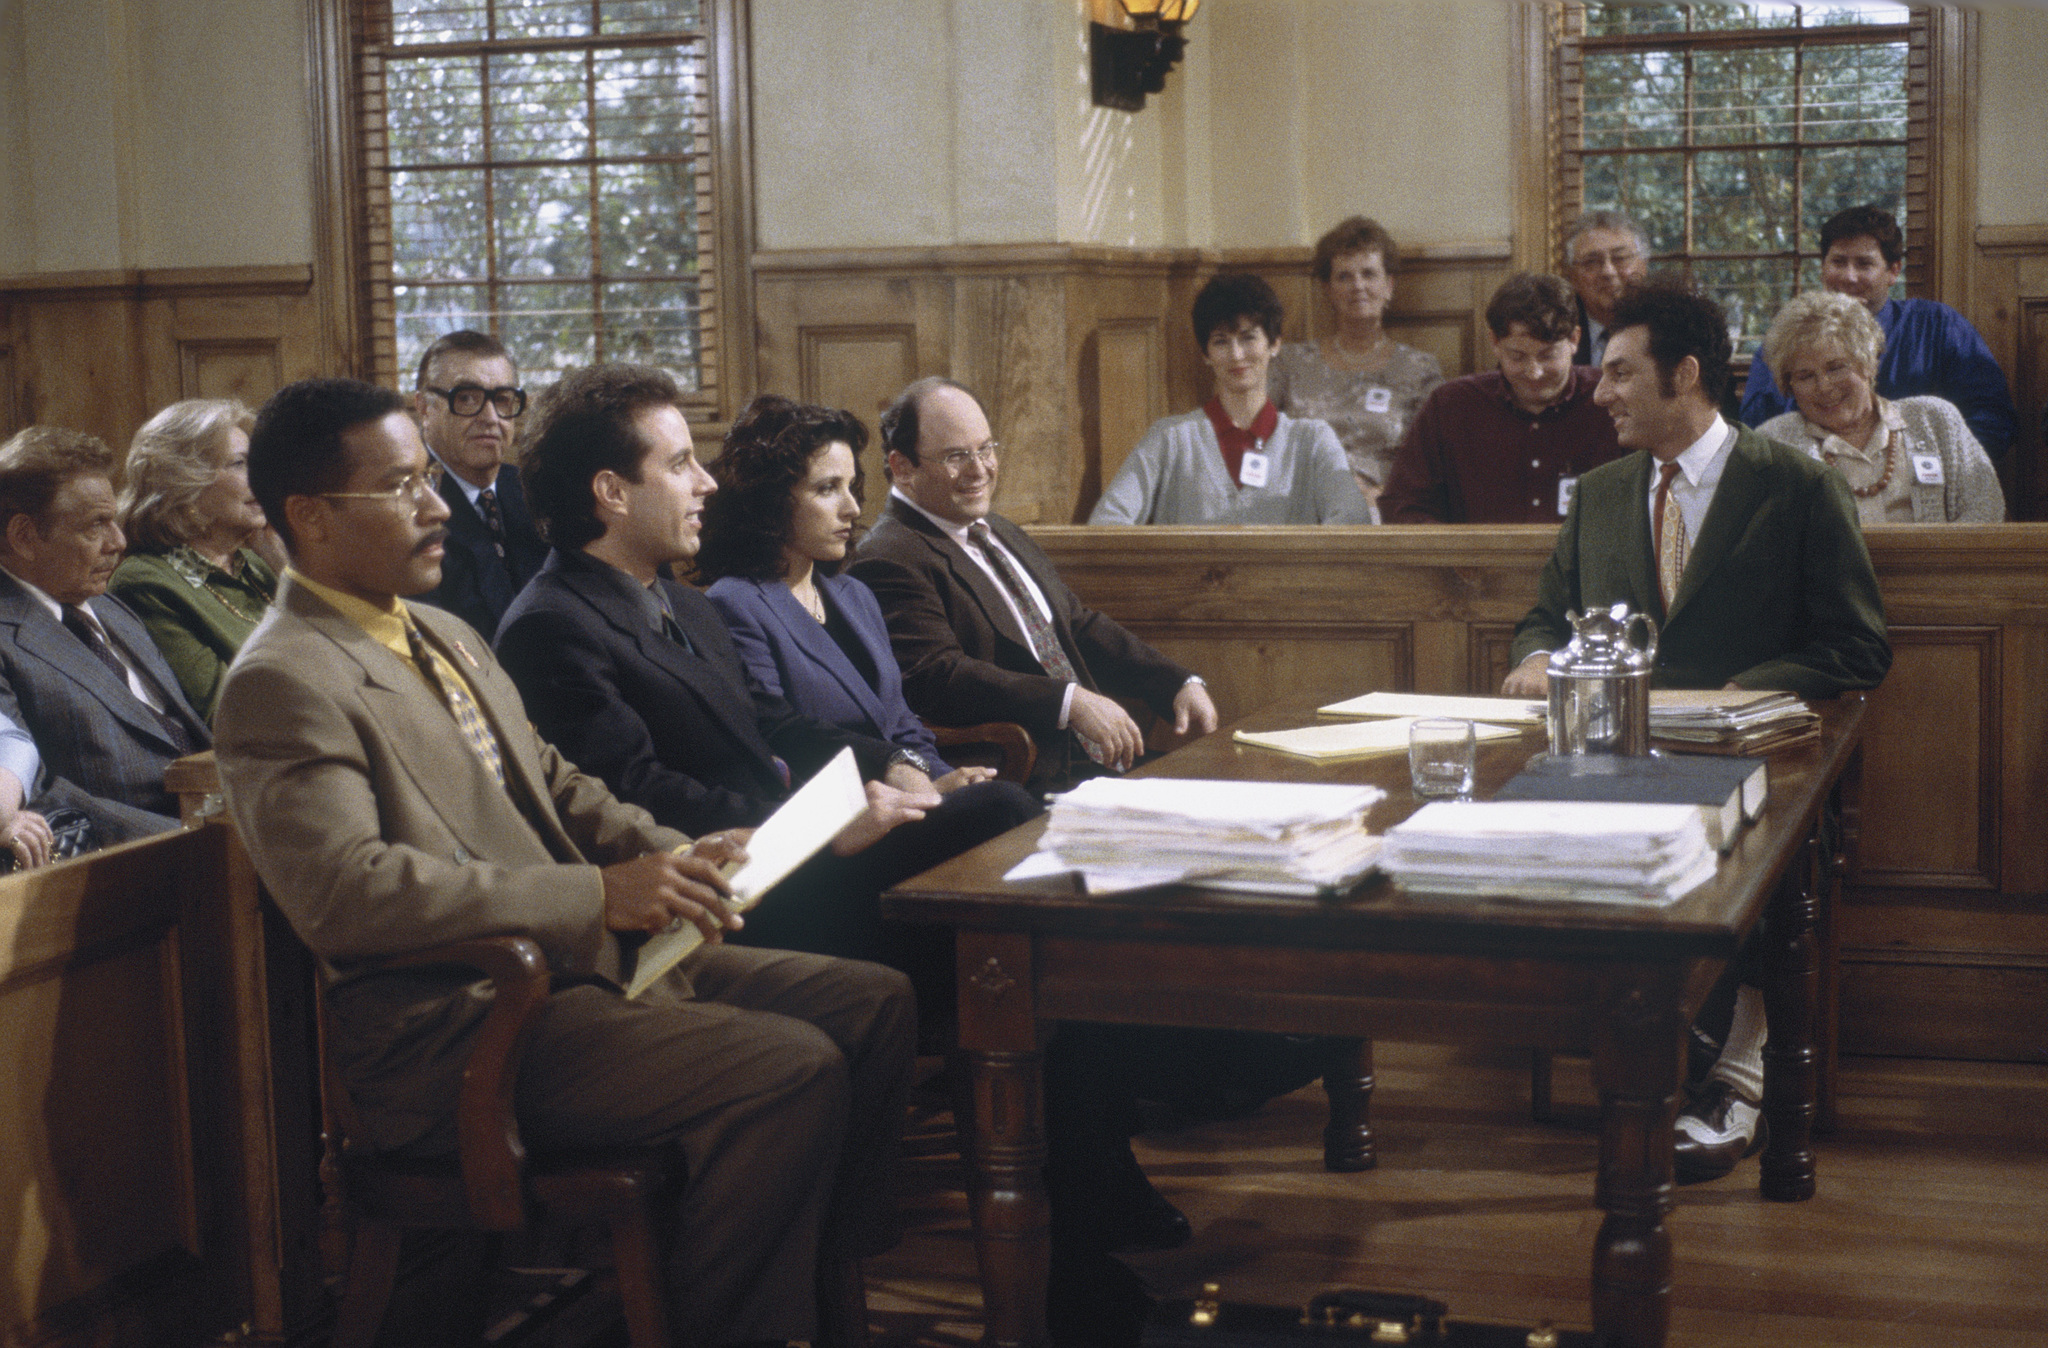 Julia Louis-Dreyfus, Jerry Seinfeld, Jason Alexander, Phil Morris, Michael Richards and Cosmo Kramer at event of Seinfeld (1989)